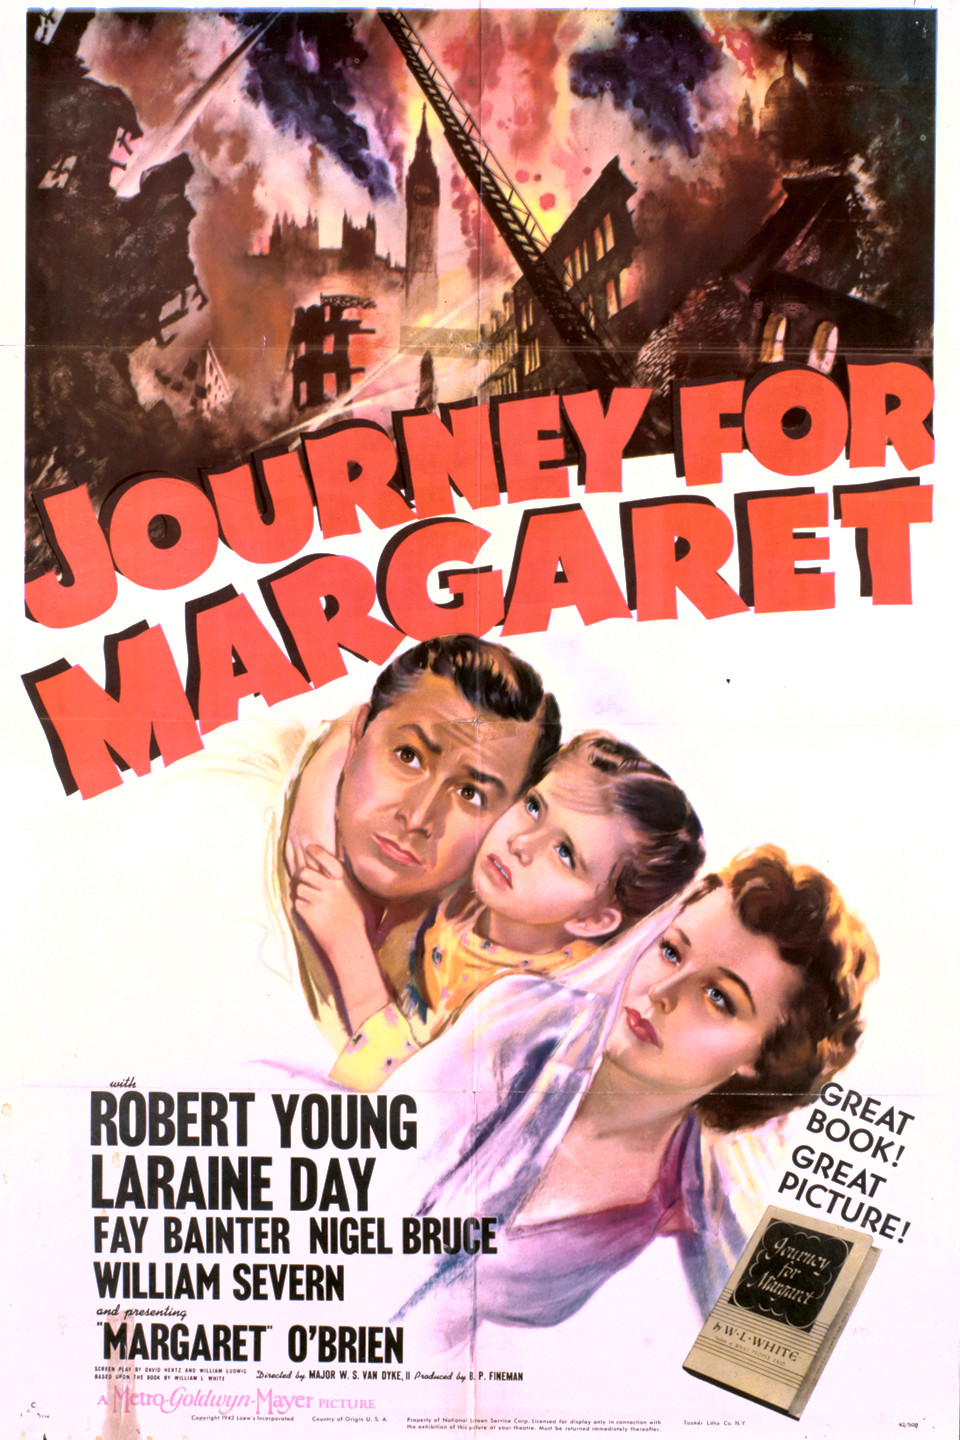 journey for margaret movie cast